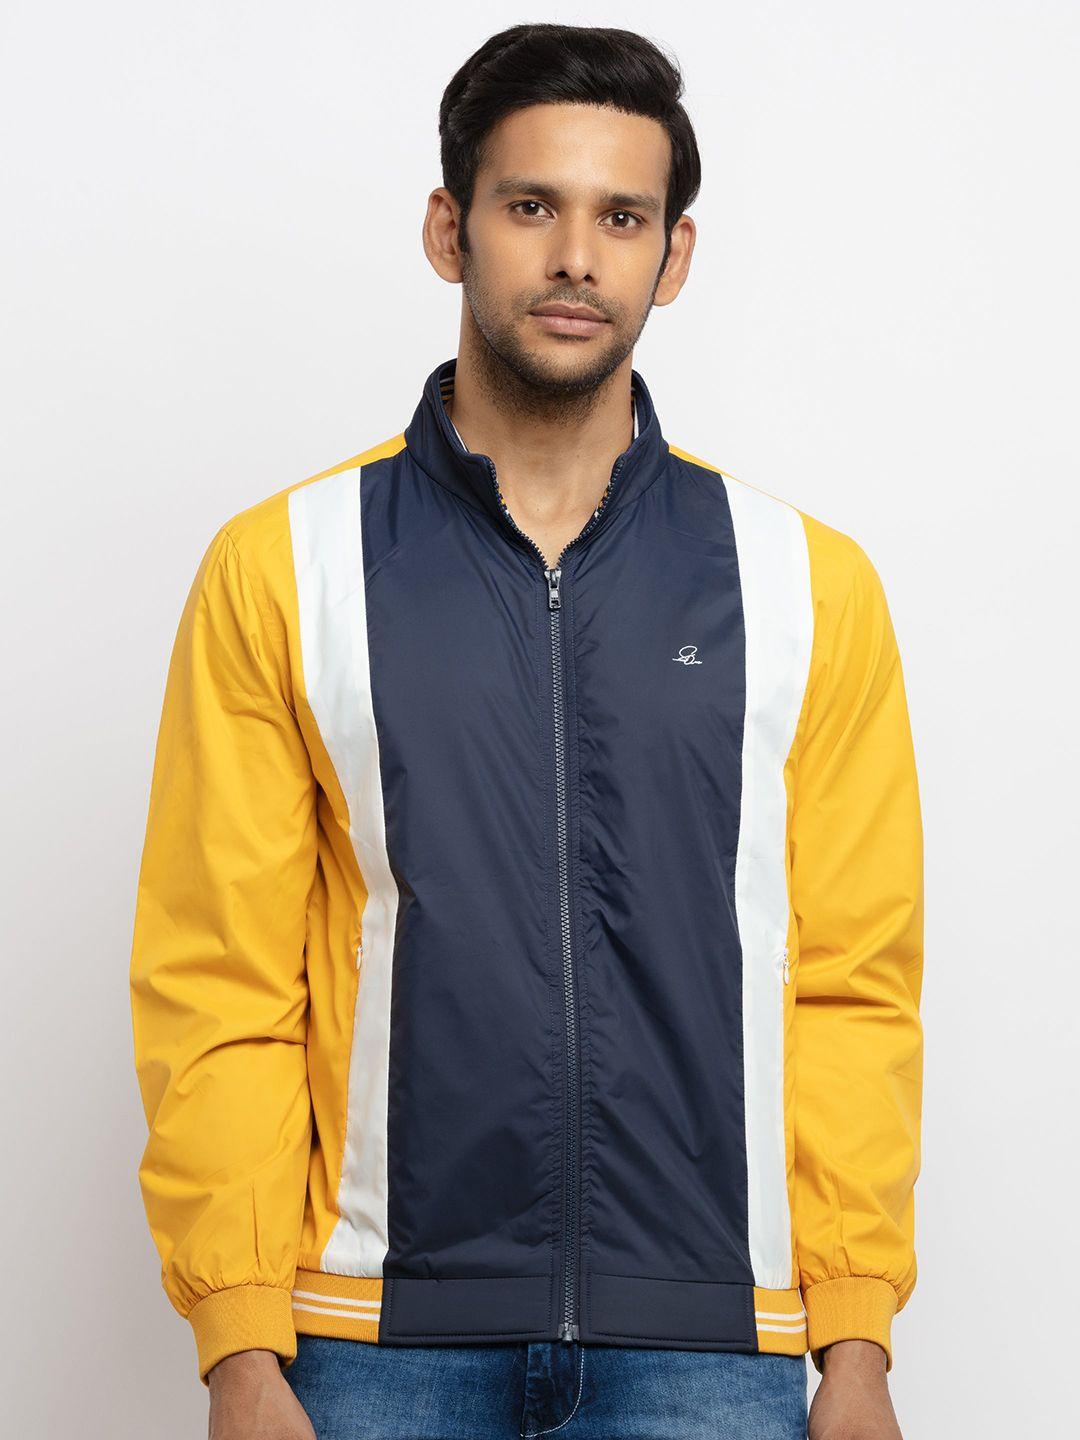 status quo men gold-toned colourblocked sporty jacket